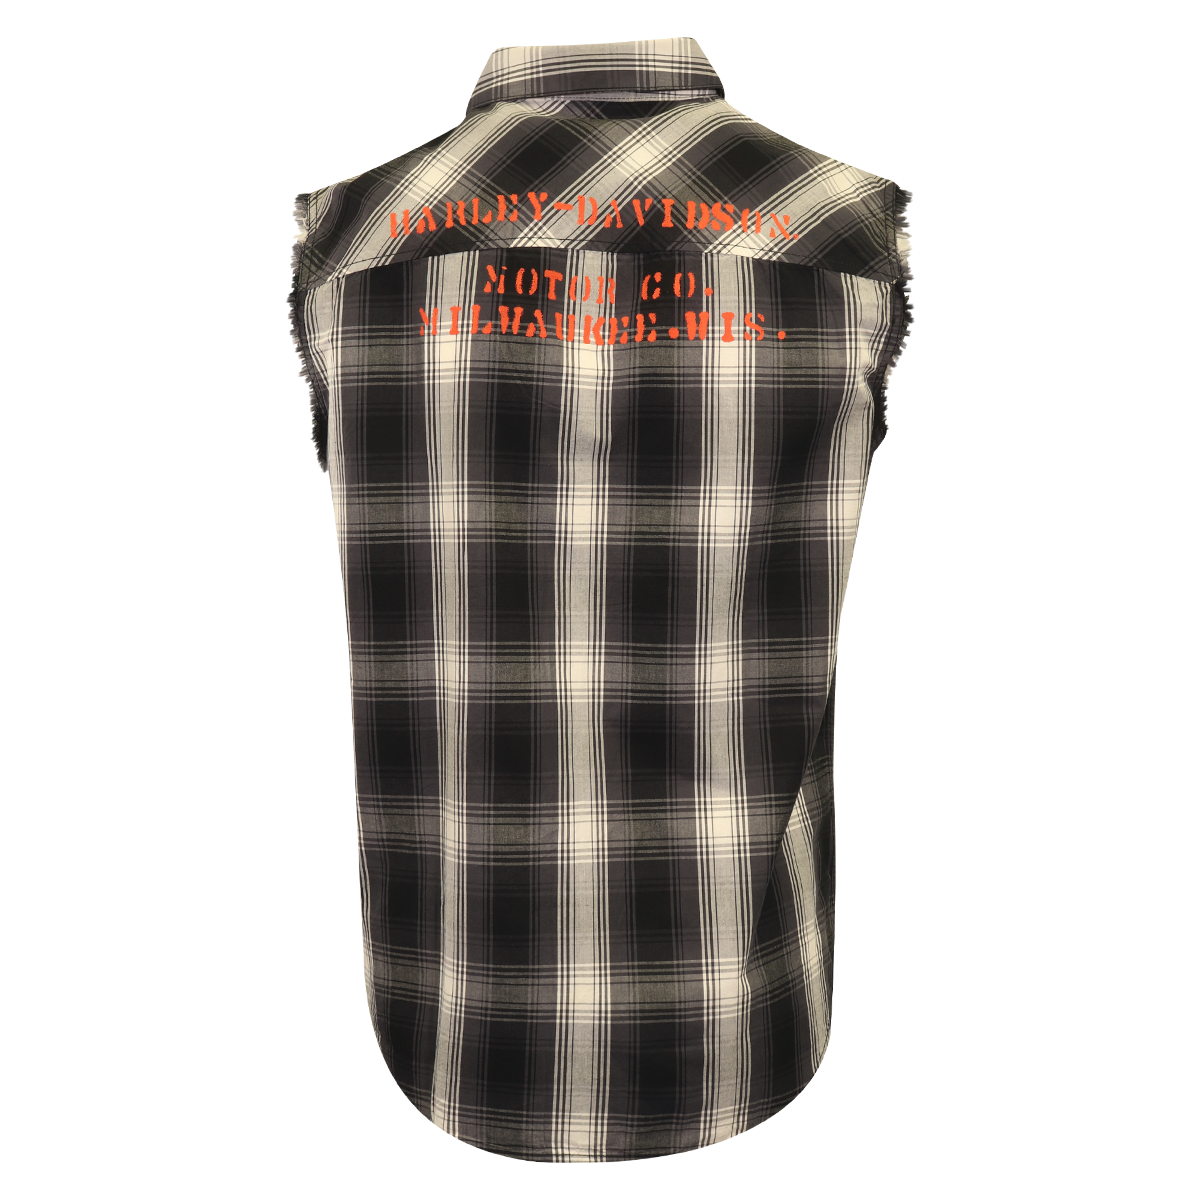 Harley-Davidson Men's Vest Grey Plaid Sleeveless Shirt (S61)